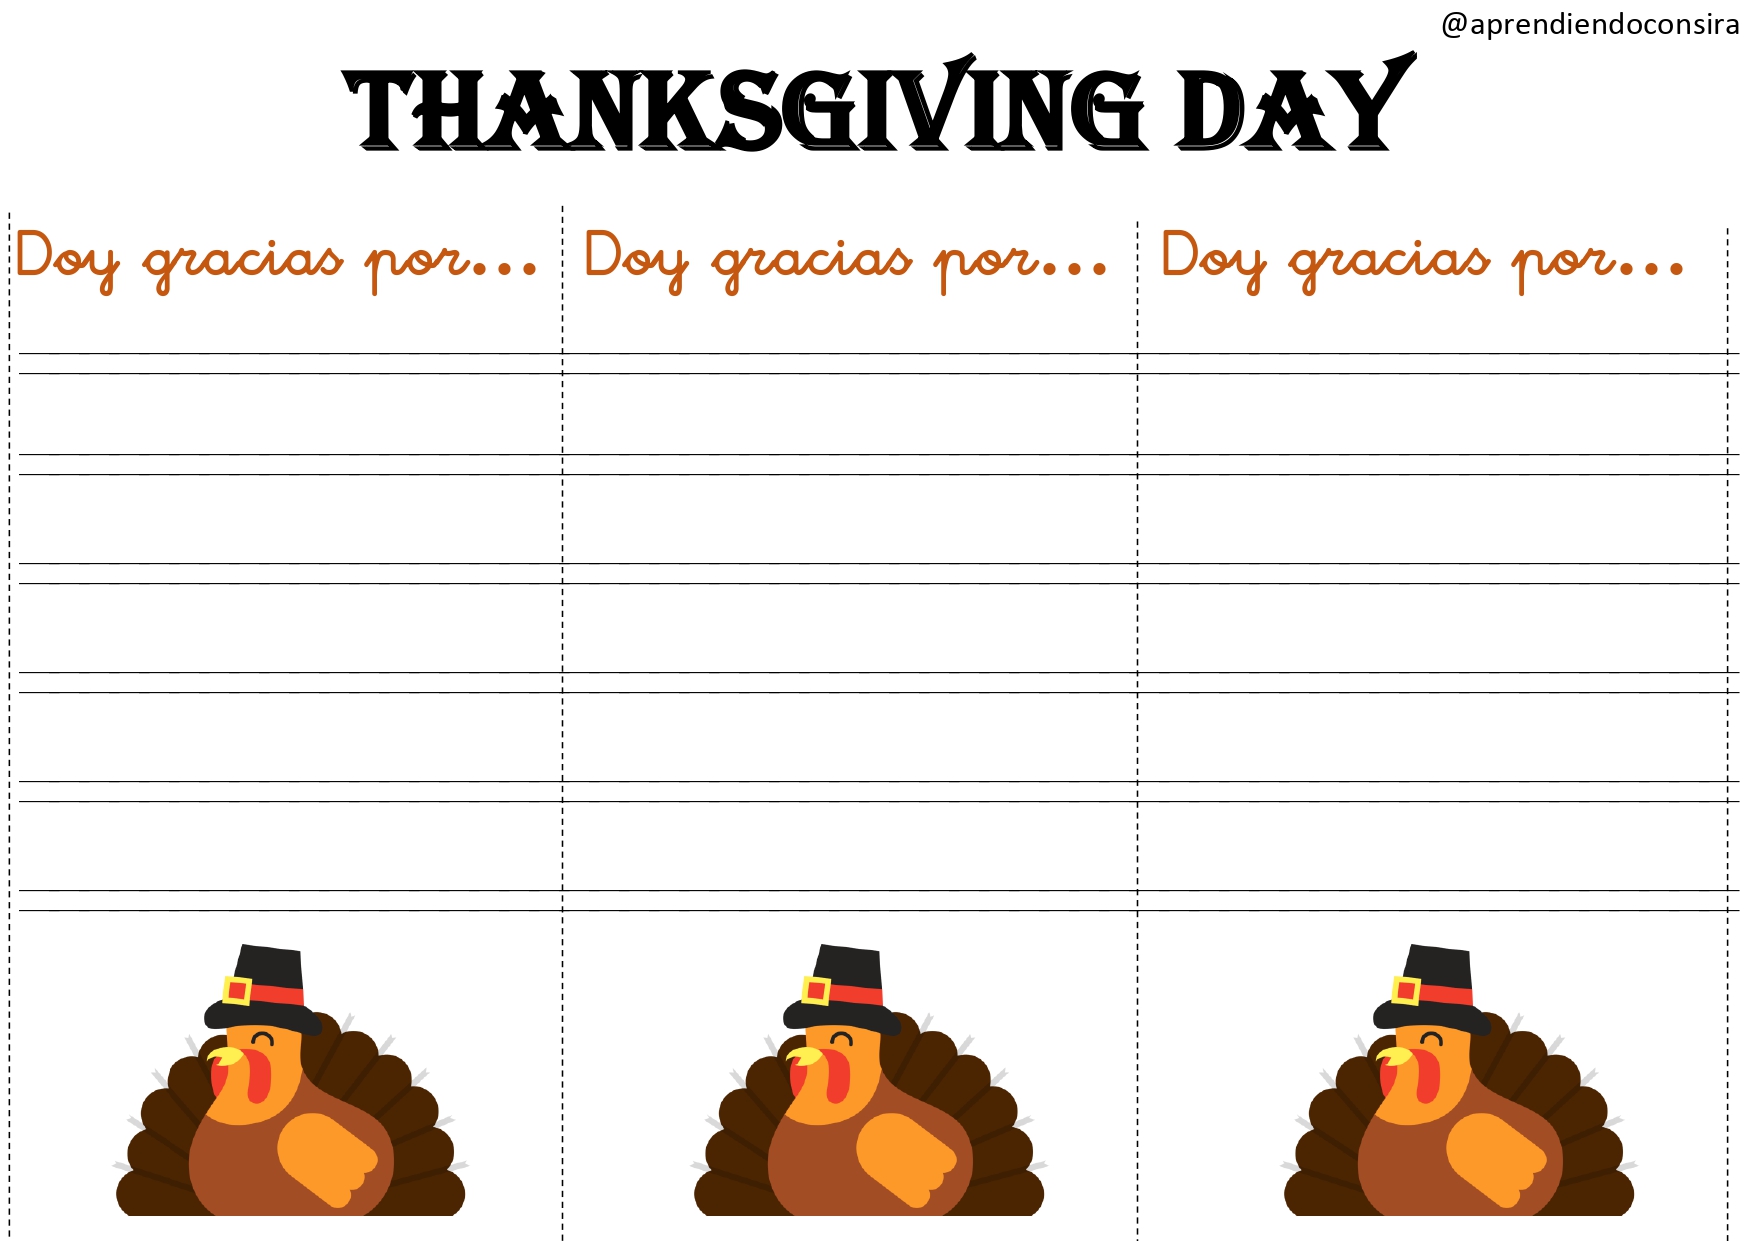 Thanksgiving Day tarjetas agradecimiento